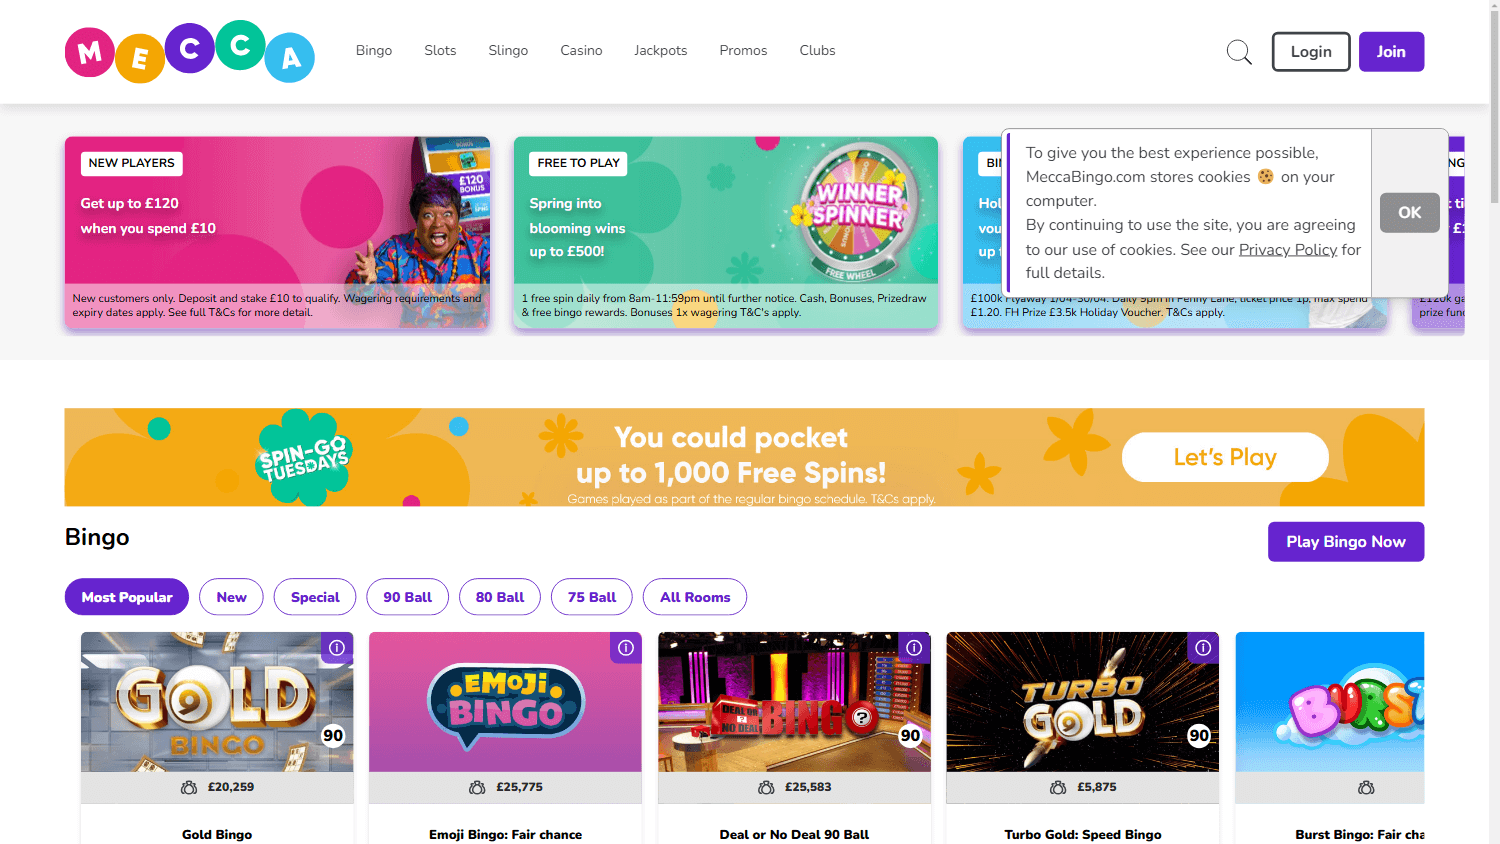 mecca_bingo_casino_homepage_desktop